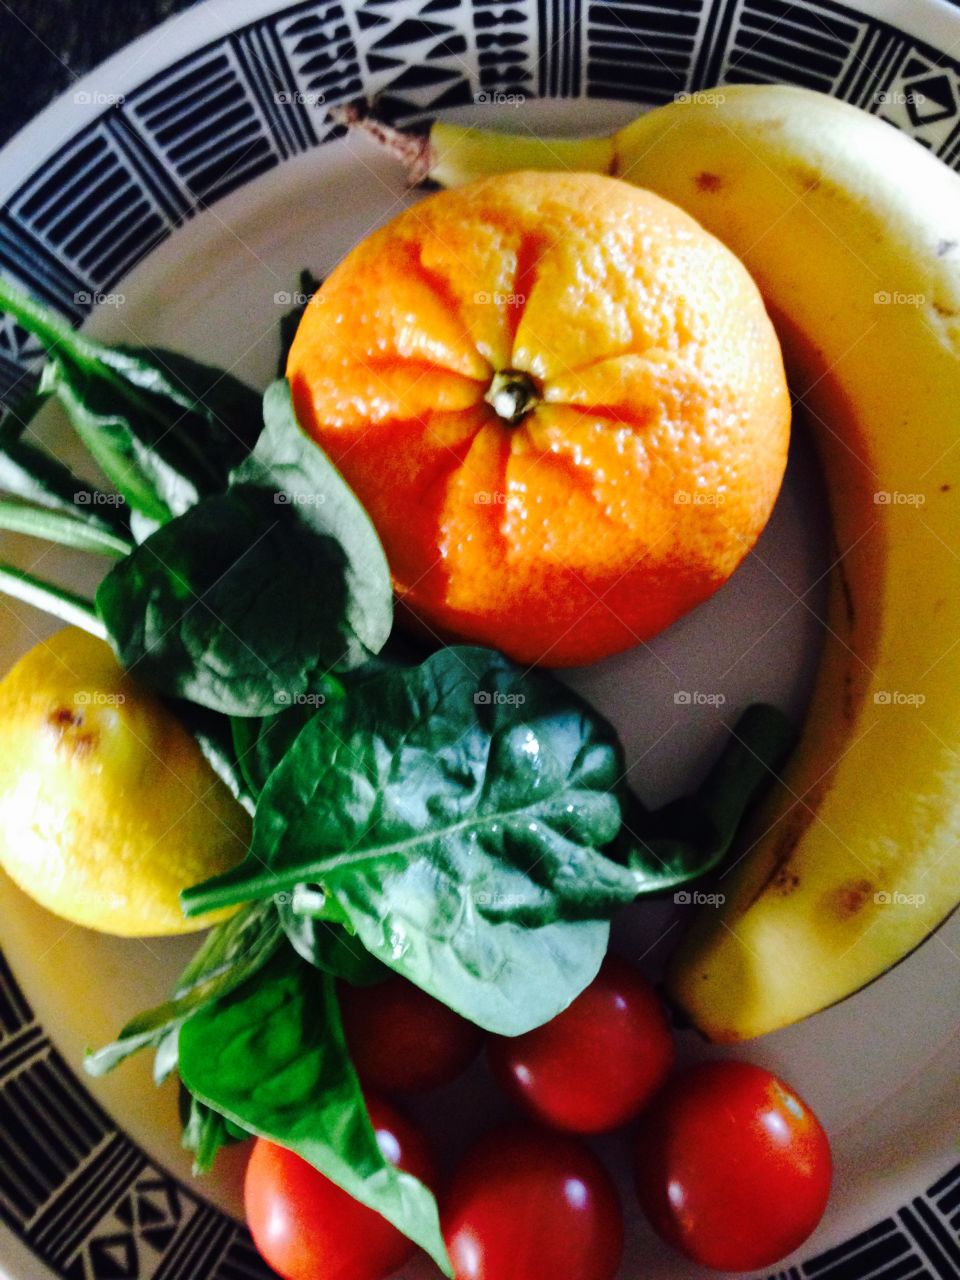 Fruit and veggies!. Orange, banana, tomato, spinach, oh my! Colors of health, fruit and veggies yum!